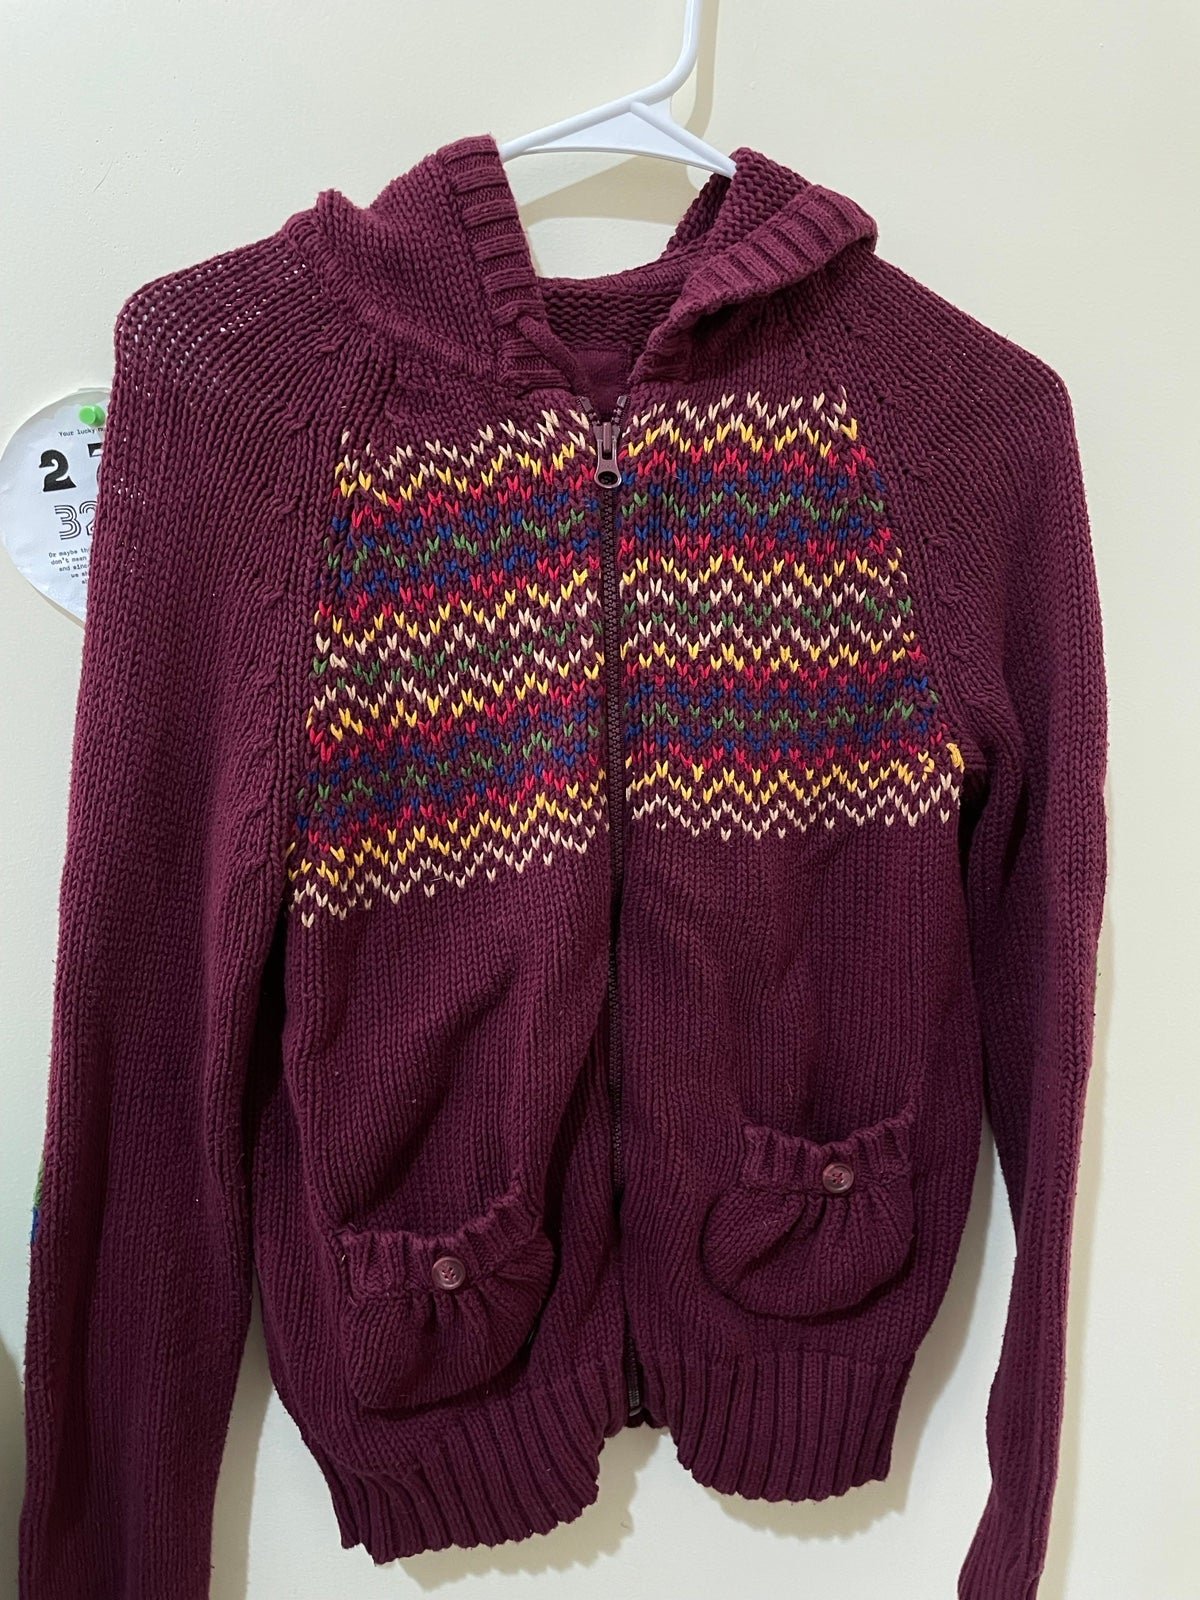 Great Burgundy knit zip up sweater lnVfi6LVL on sale